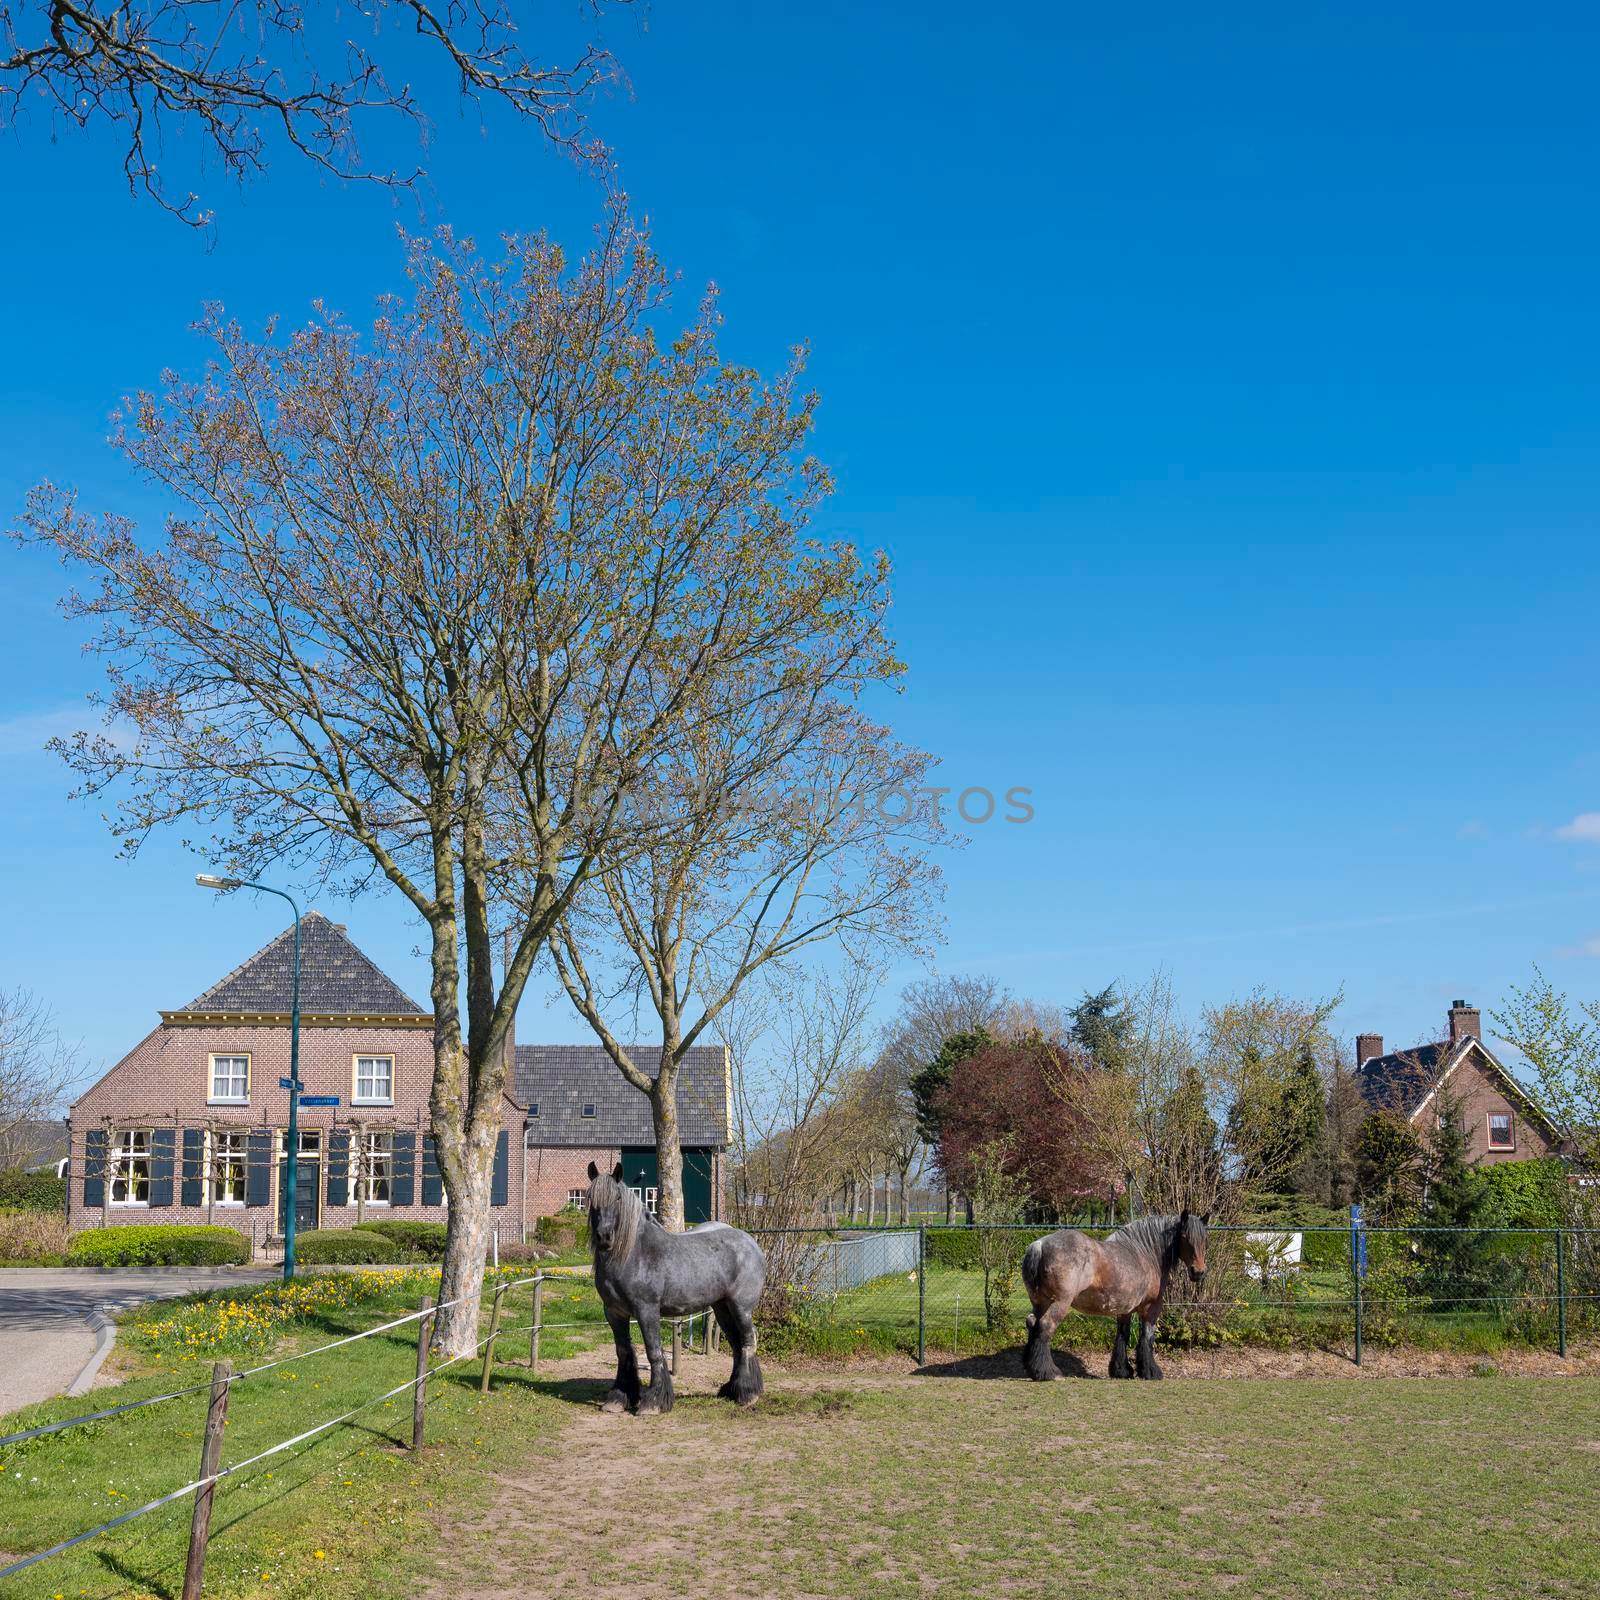 strongy built horses in spring near s hertogenbosch in the netherlands under blue sky by ahavelaar